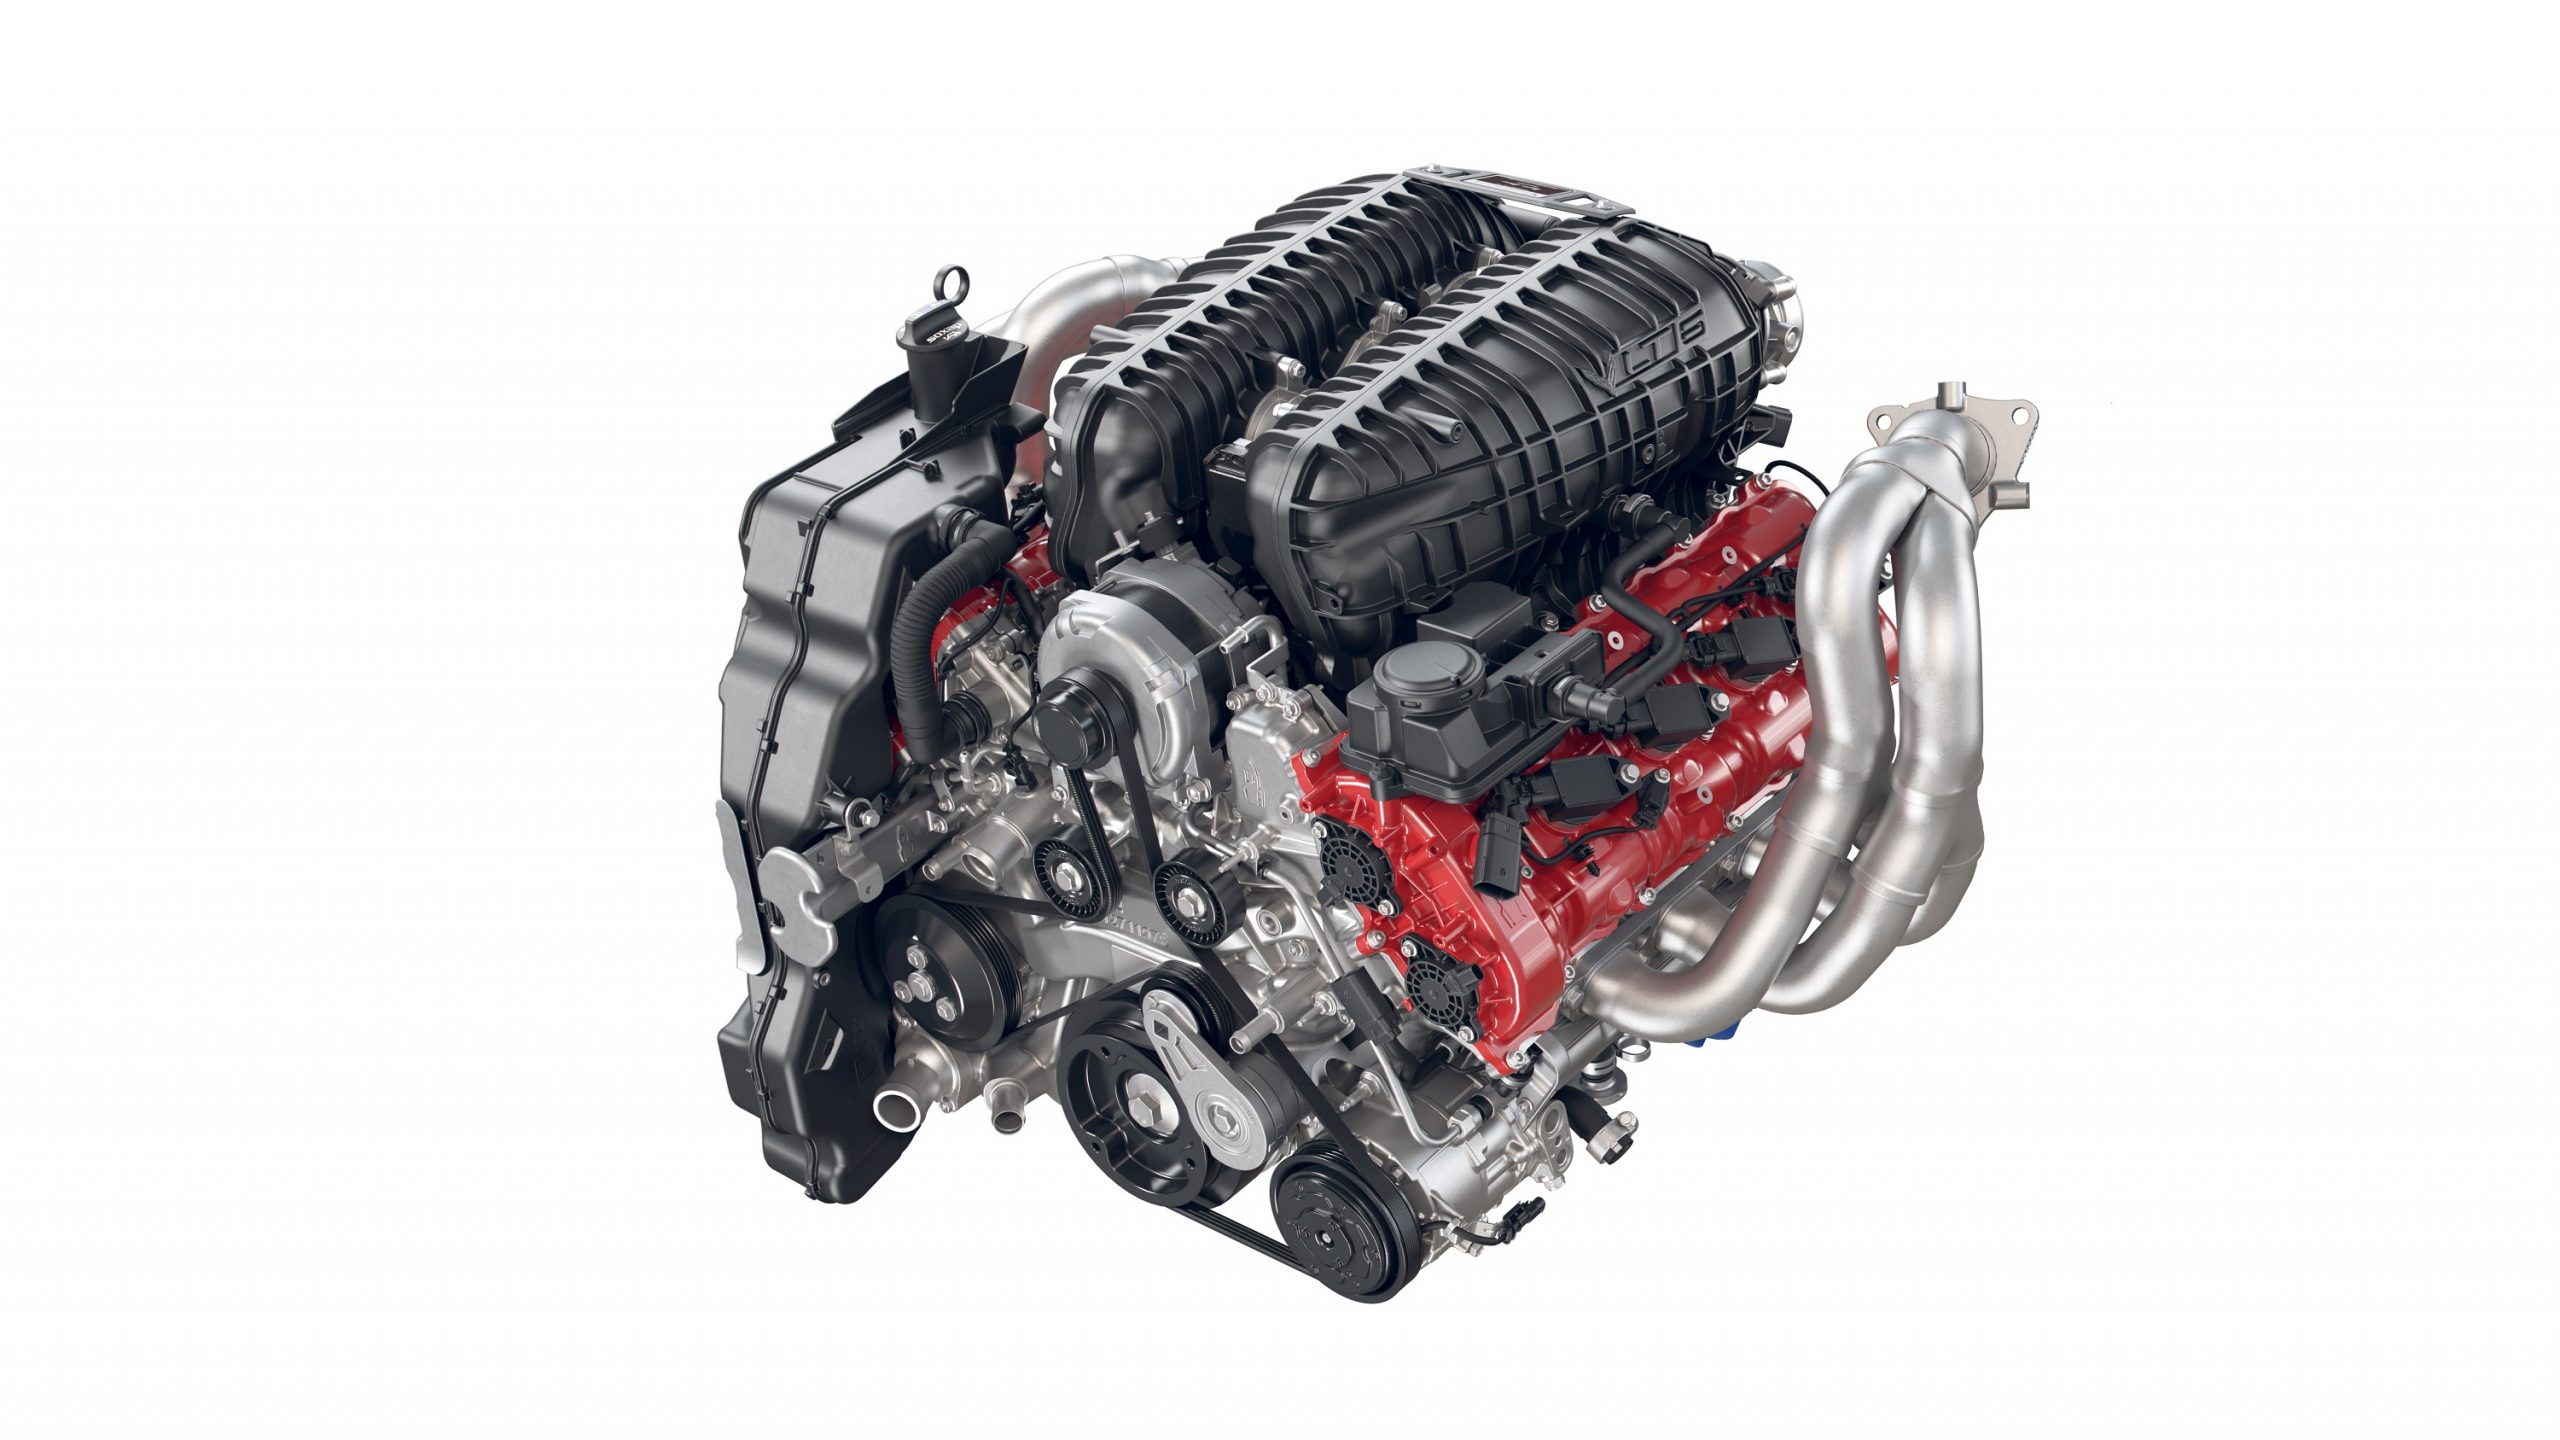 The LT6 5.5L V8 that powers the new Corvette Z06